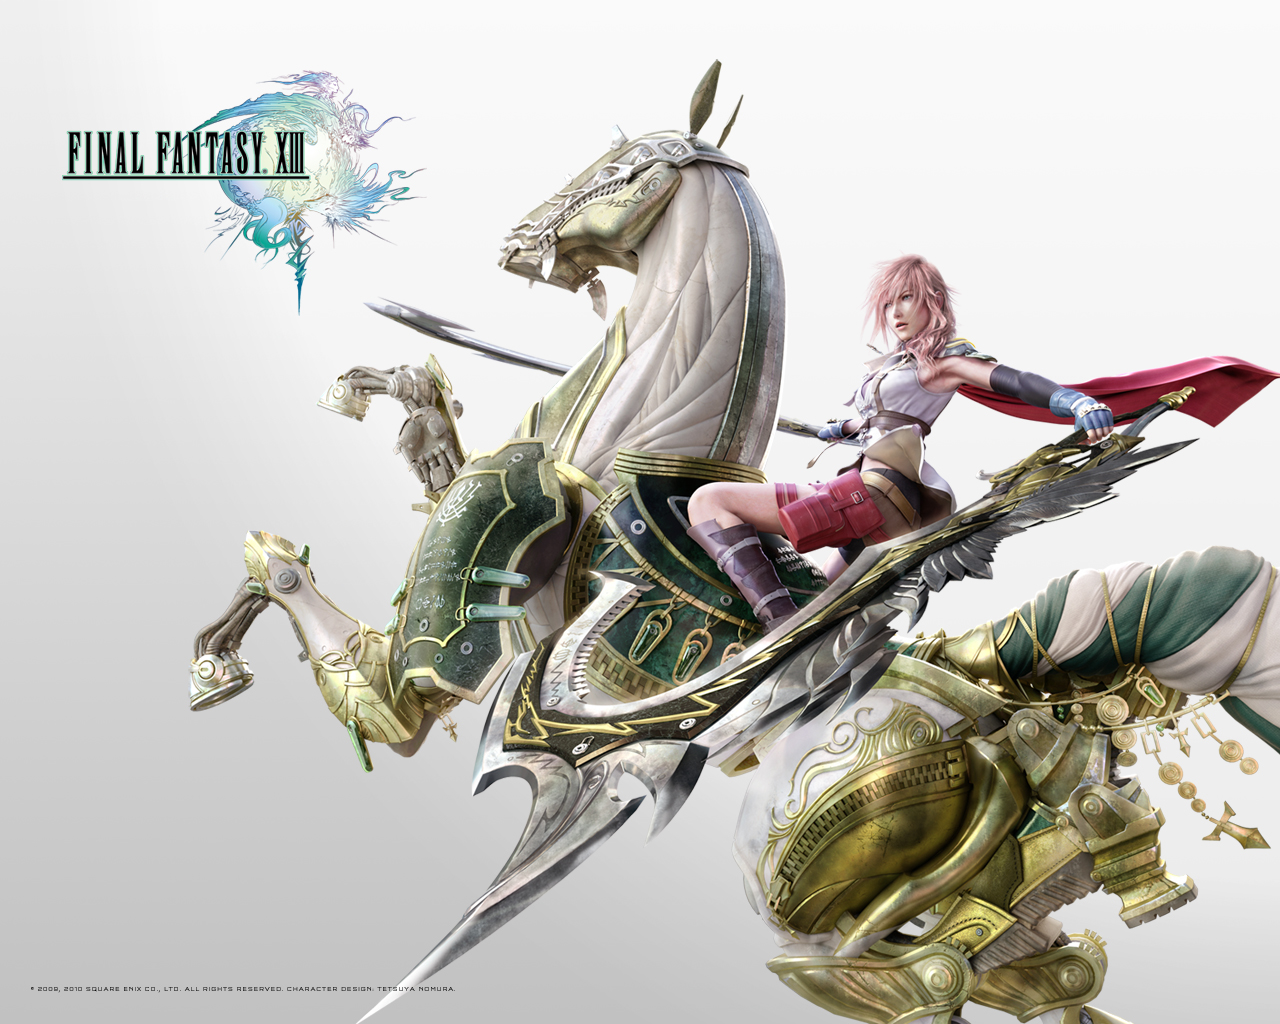 Final Fantasy XIII Wallpapers   Final Fantasy FXN Network